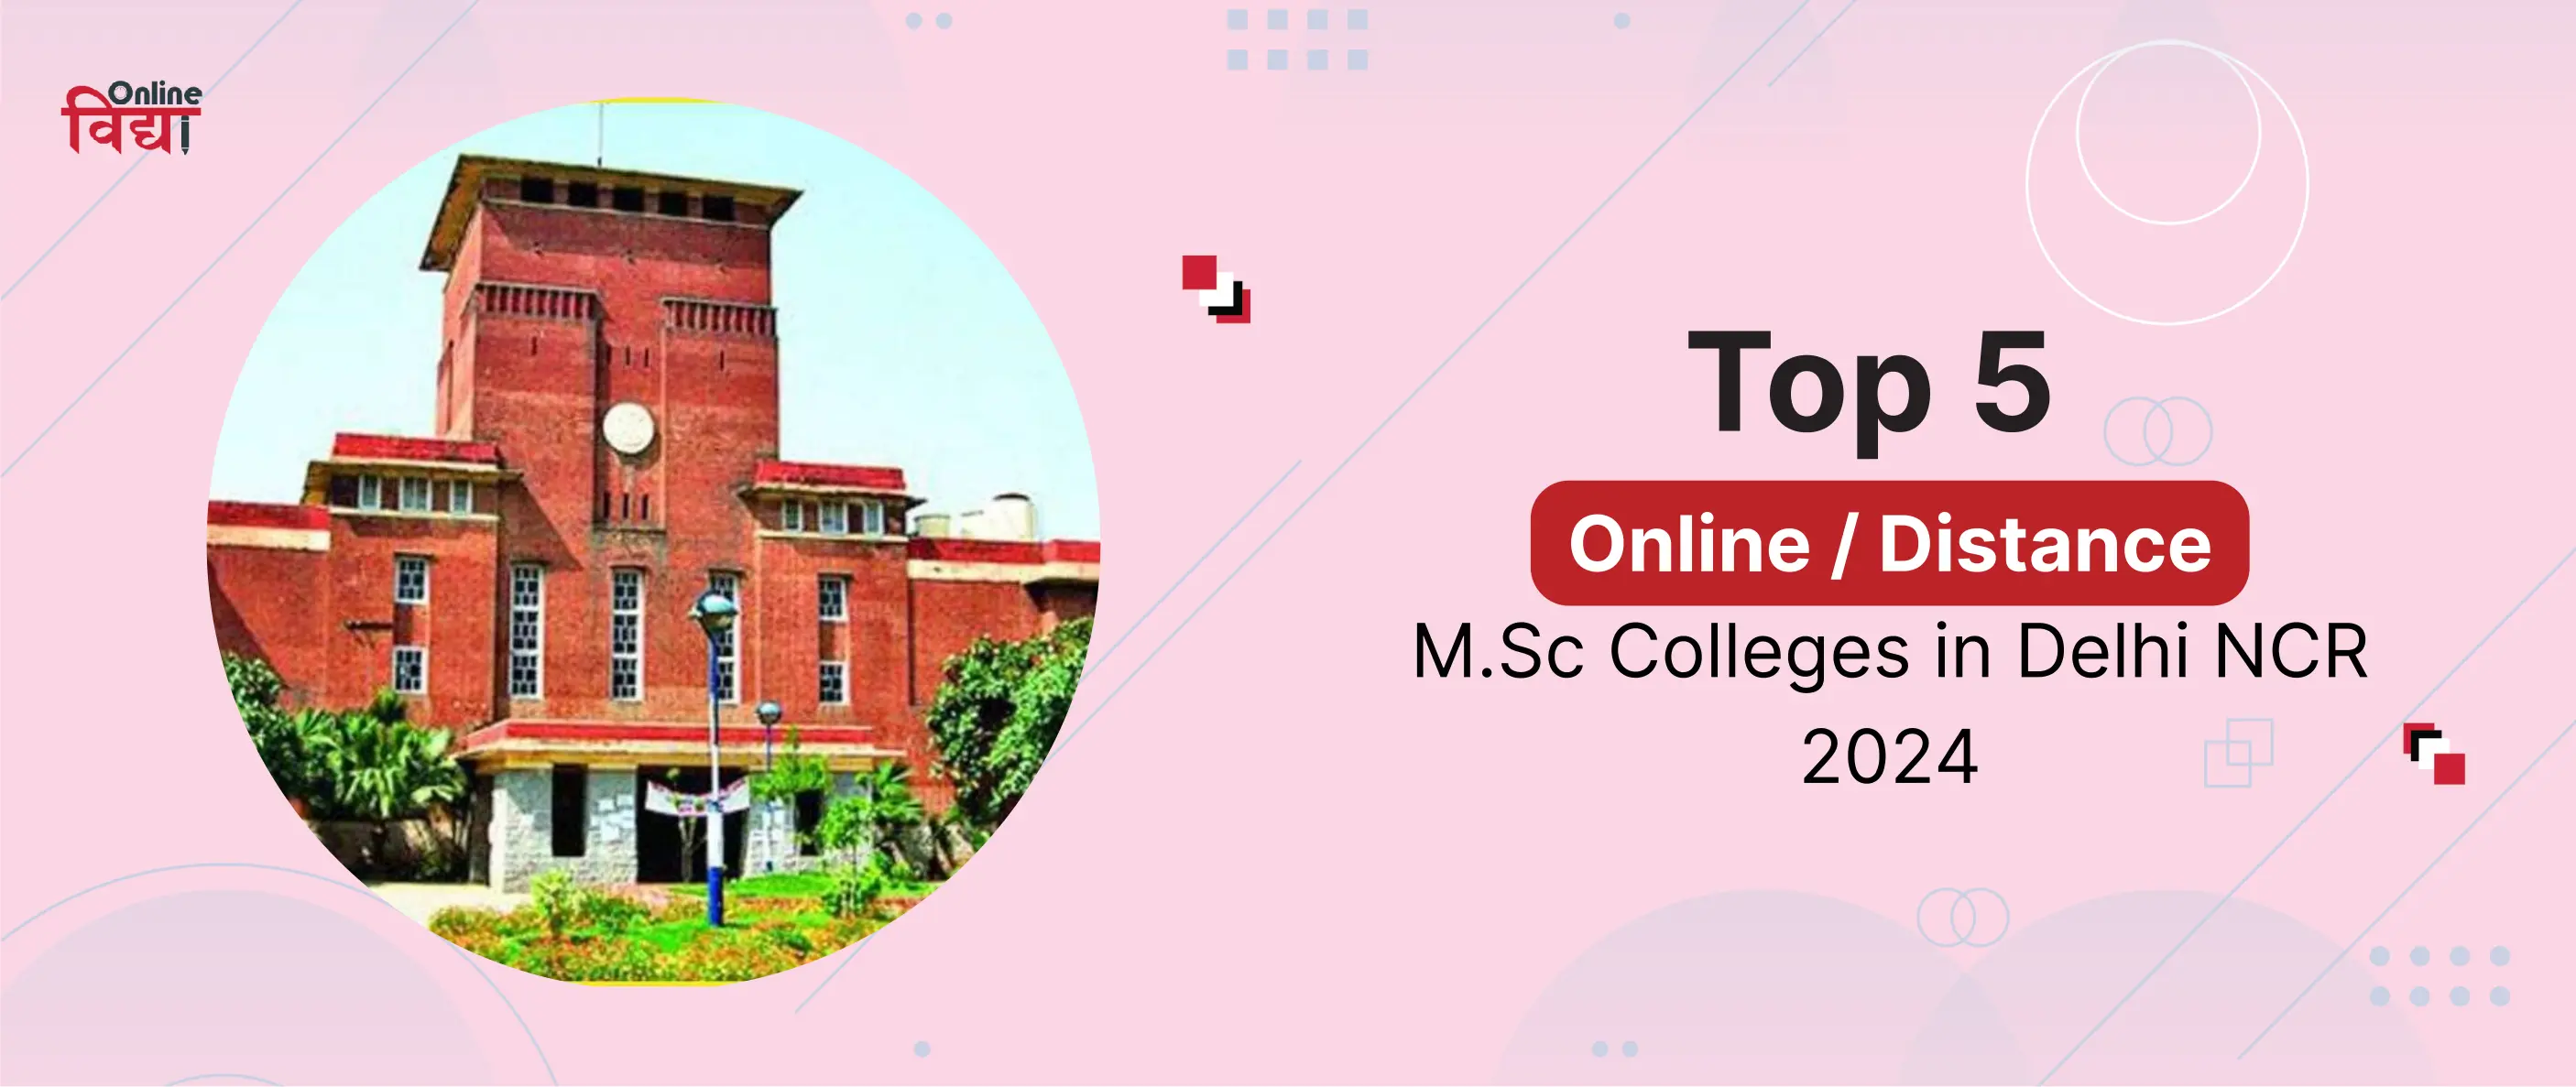 Top 5 Online/Distance M.Sc Colleges in Delhi NCR 2024